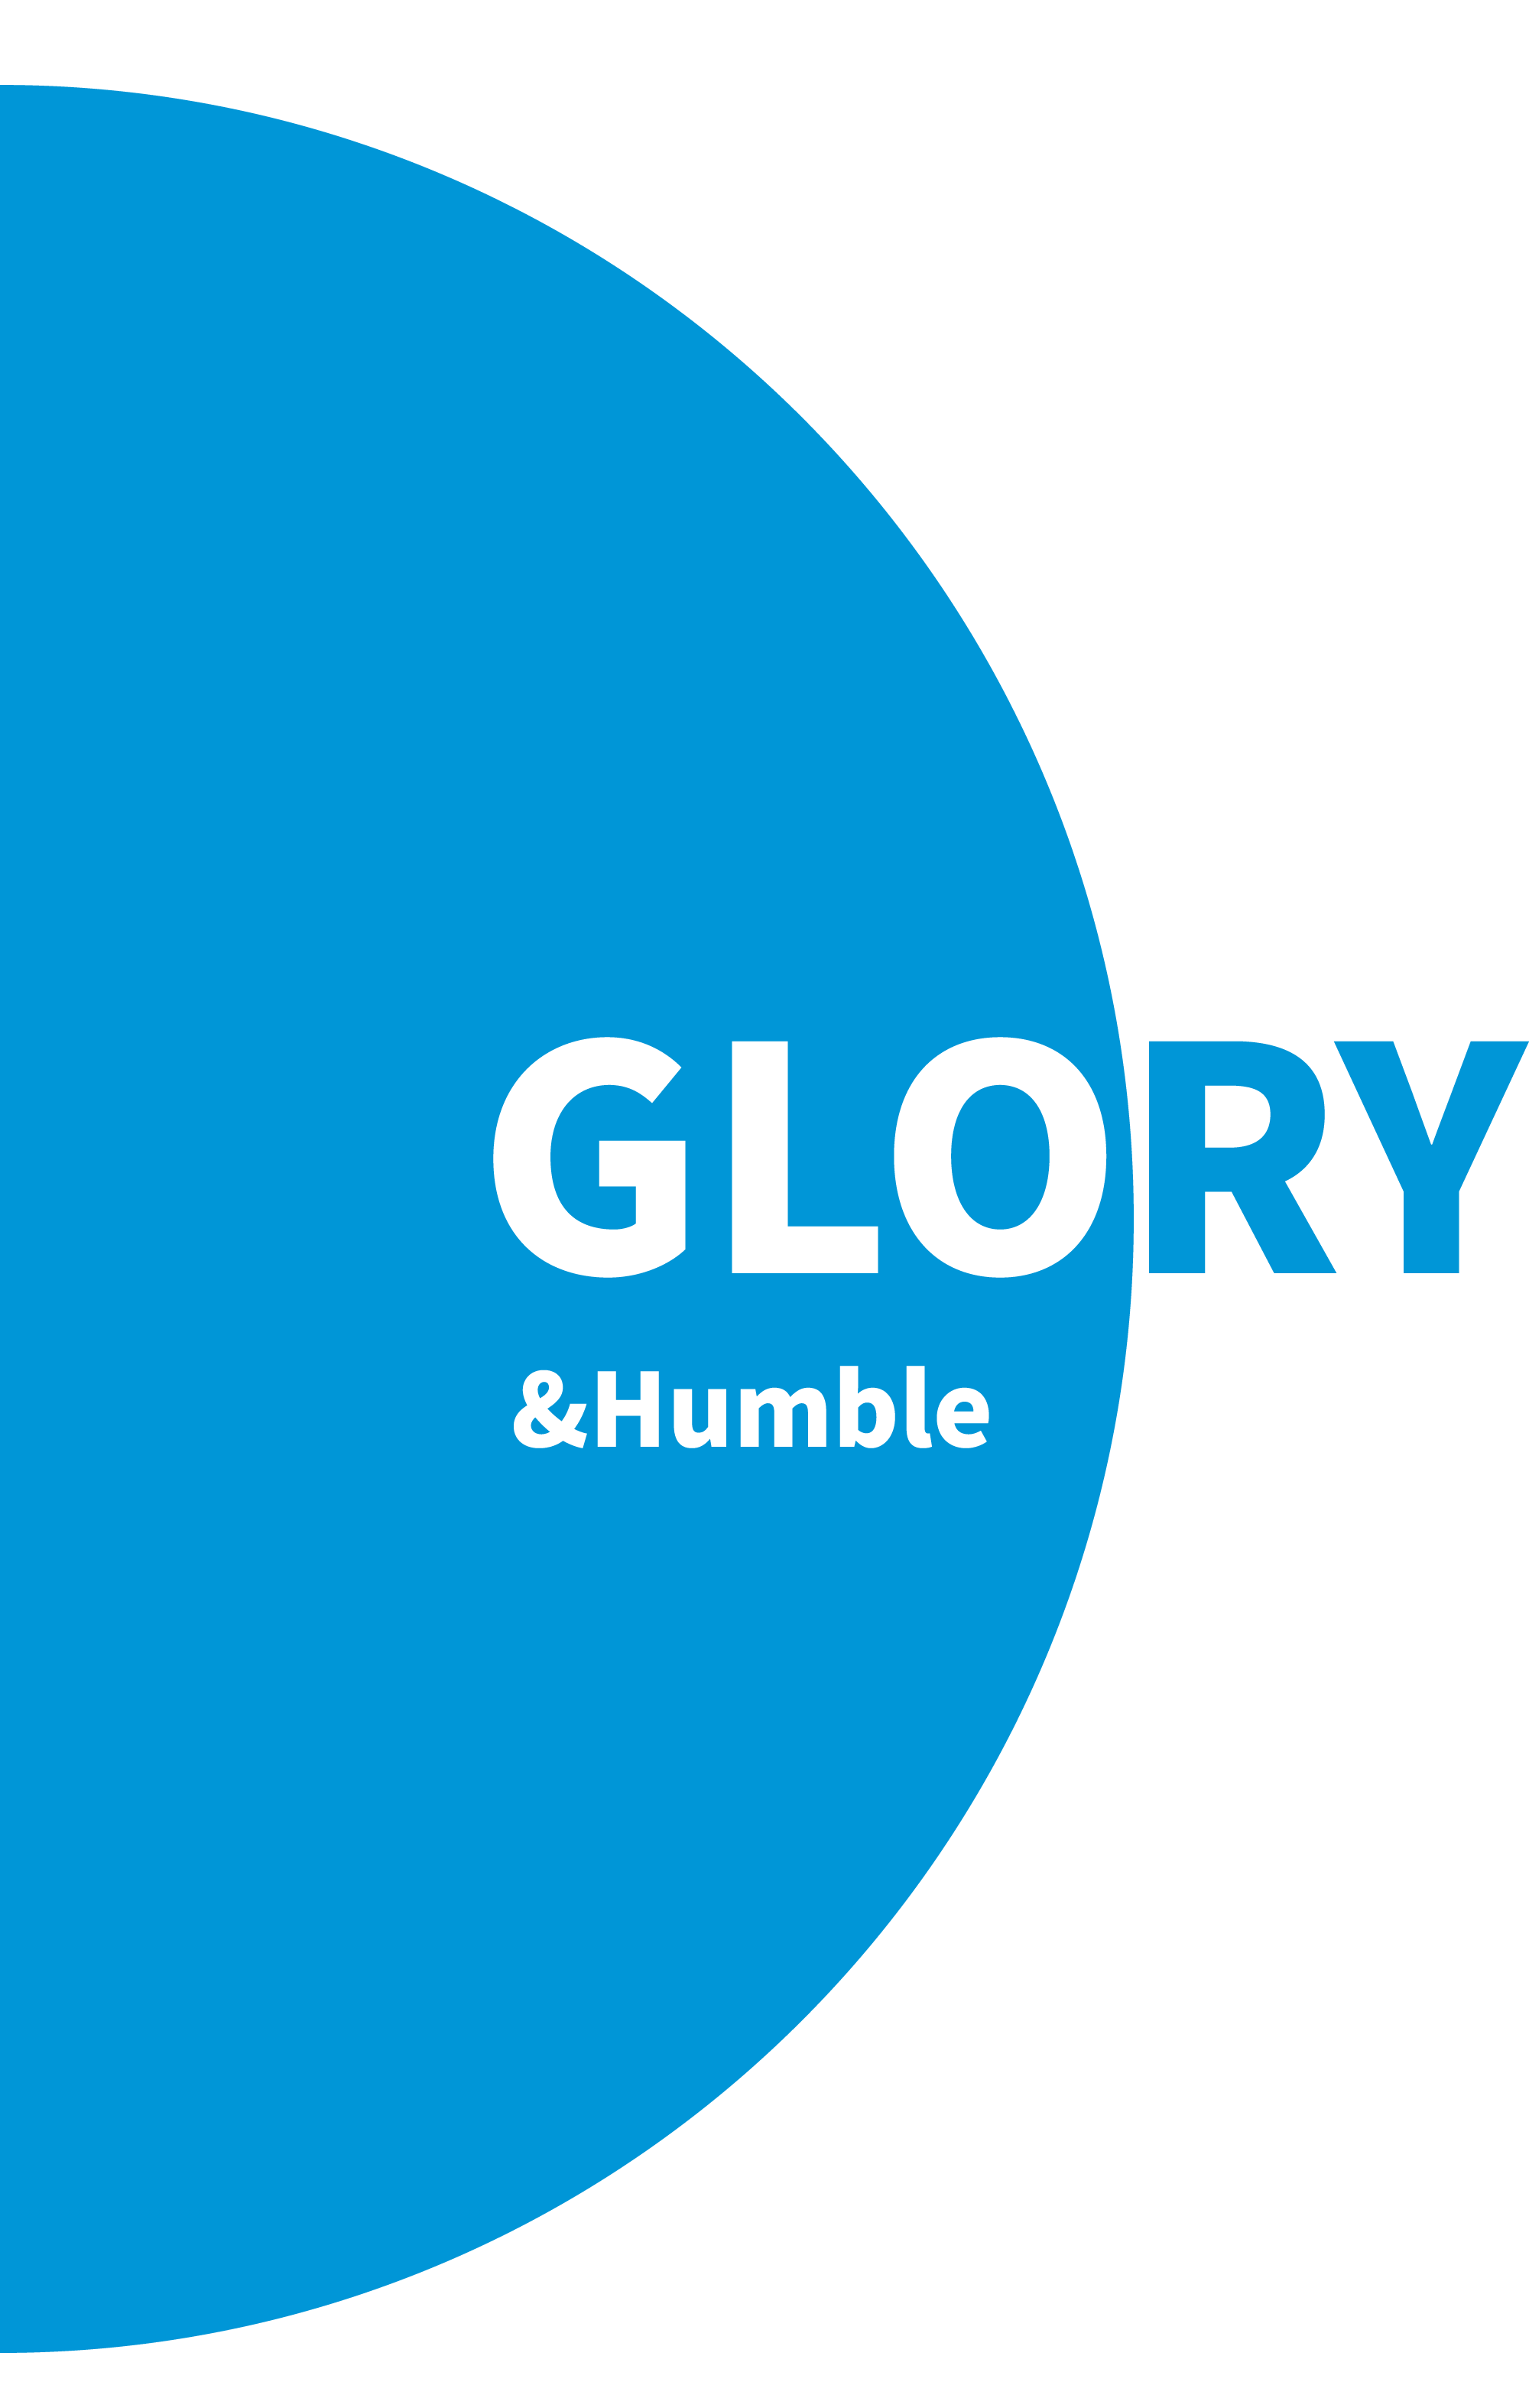 GLORY & Humble